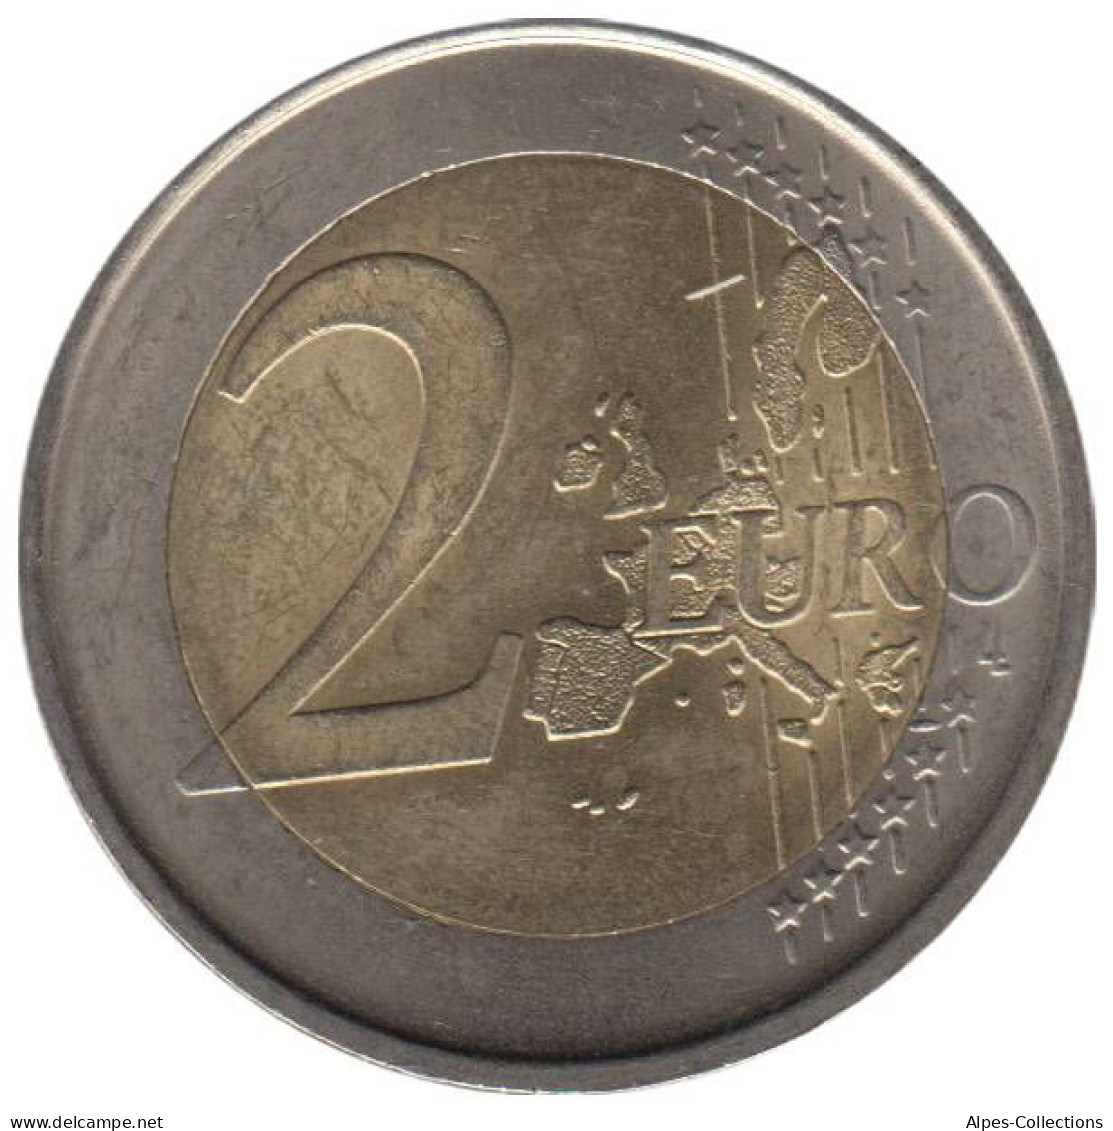 ES20006.1 - ESPAGNE - 2 Euros - 2006 - Spain